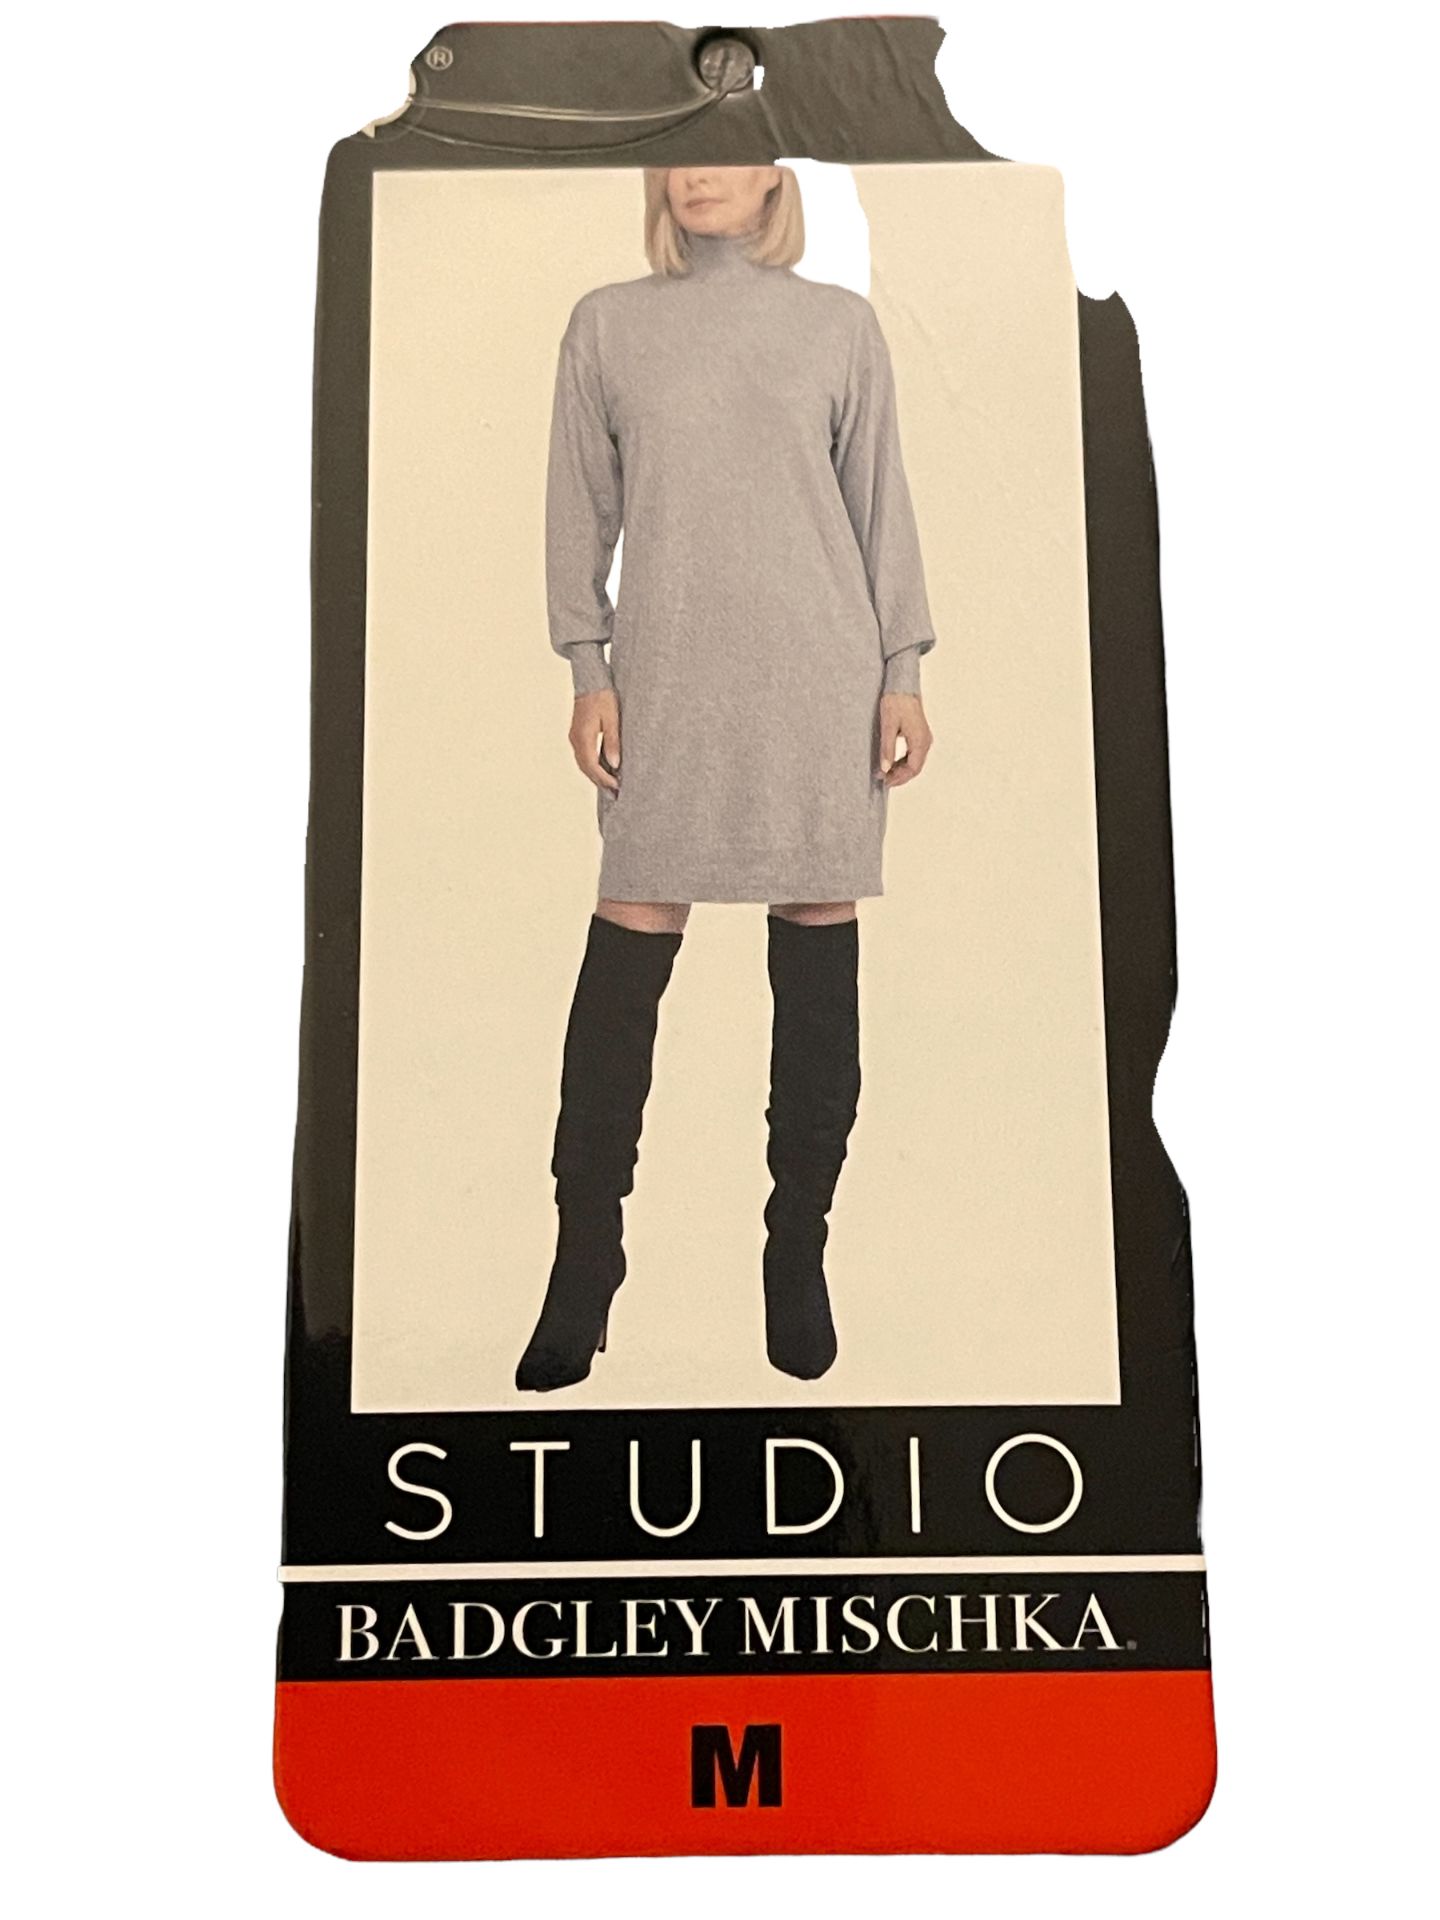 Designer Badgley Mischka Lightweight Fine Knitted Stretchy Jumper Dress UK 12 M RRP £17.99 - Image 3 of 4